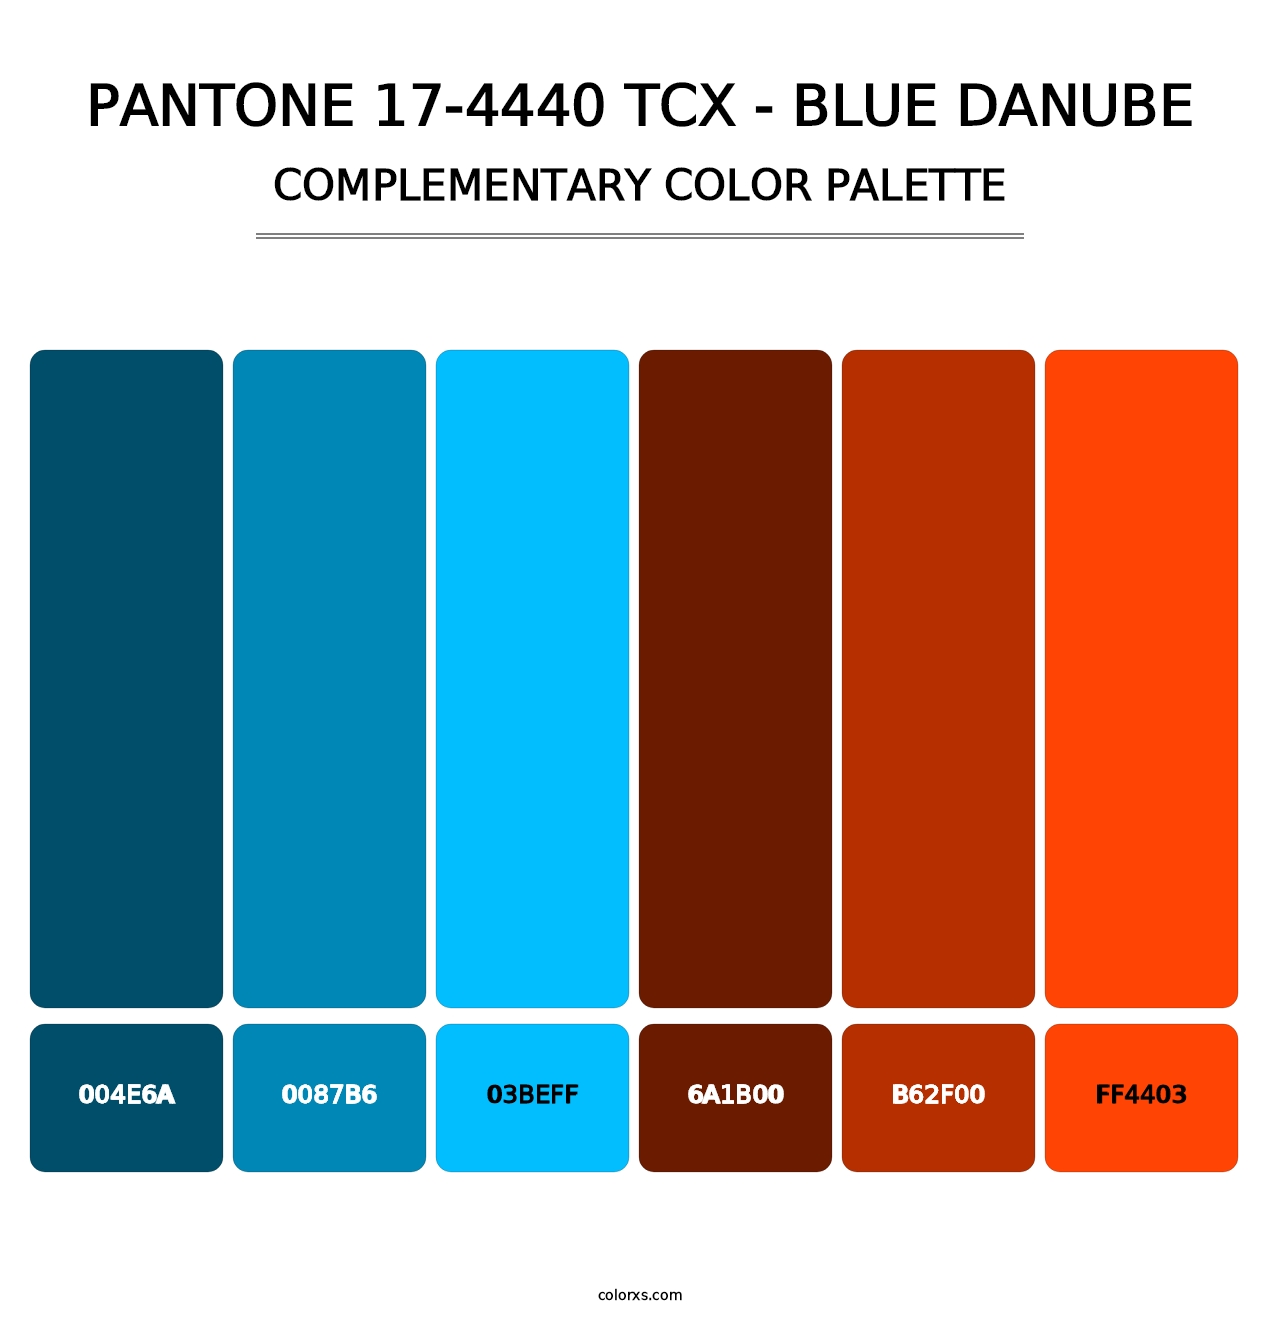 PANTONE 17-4440 TCX - Blue Danube - Complementary Color Palette